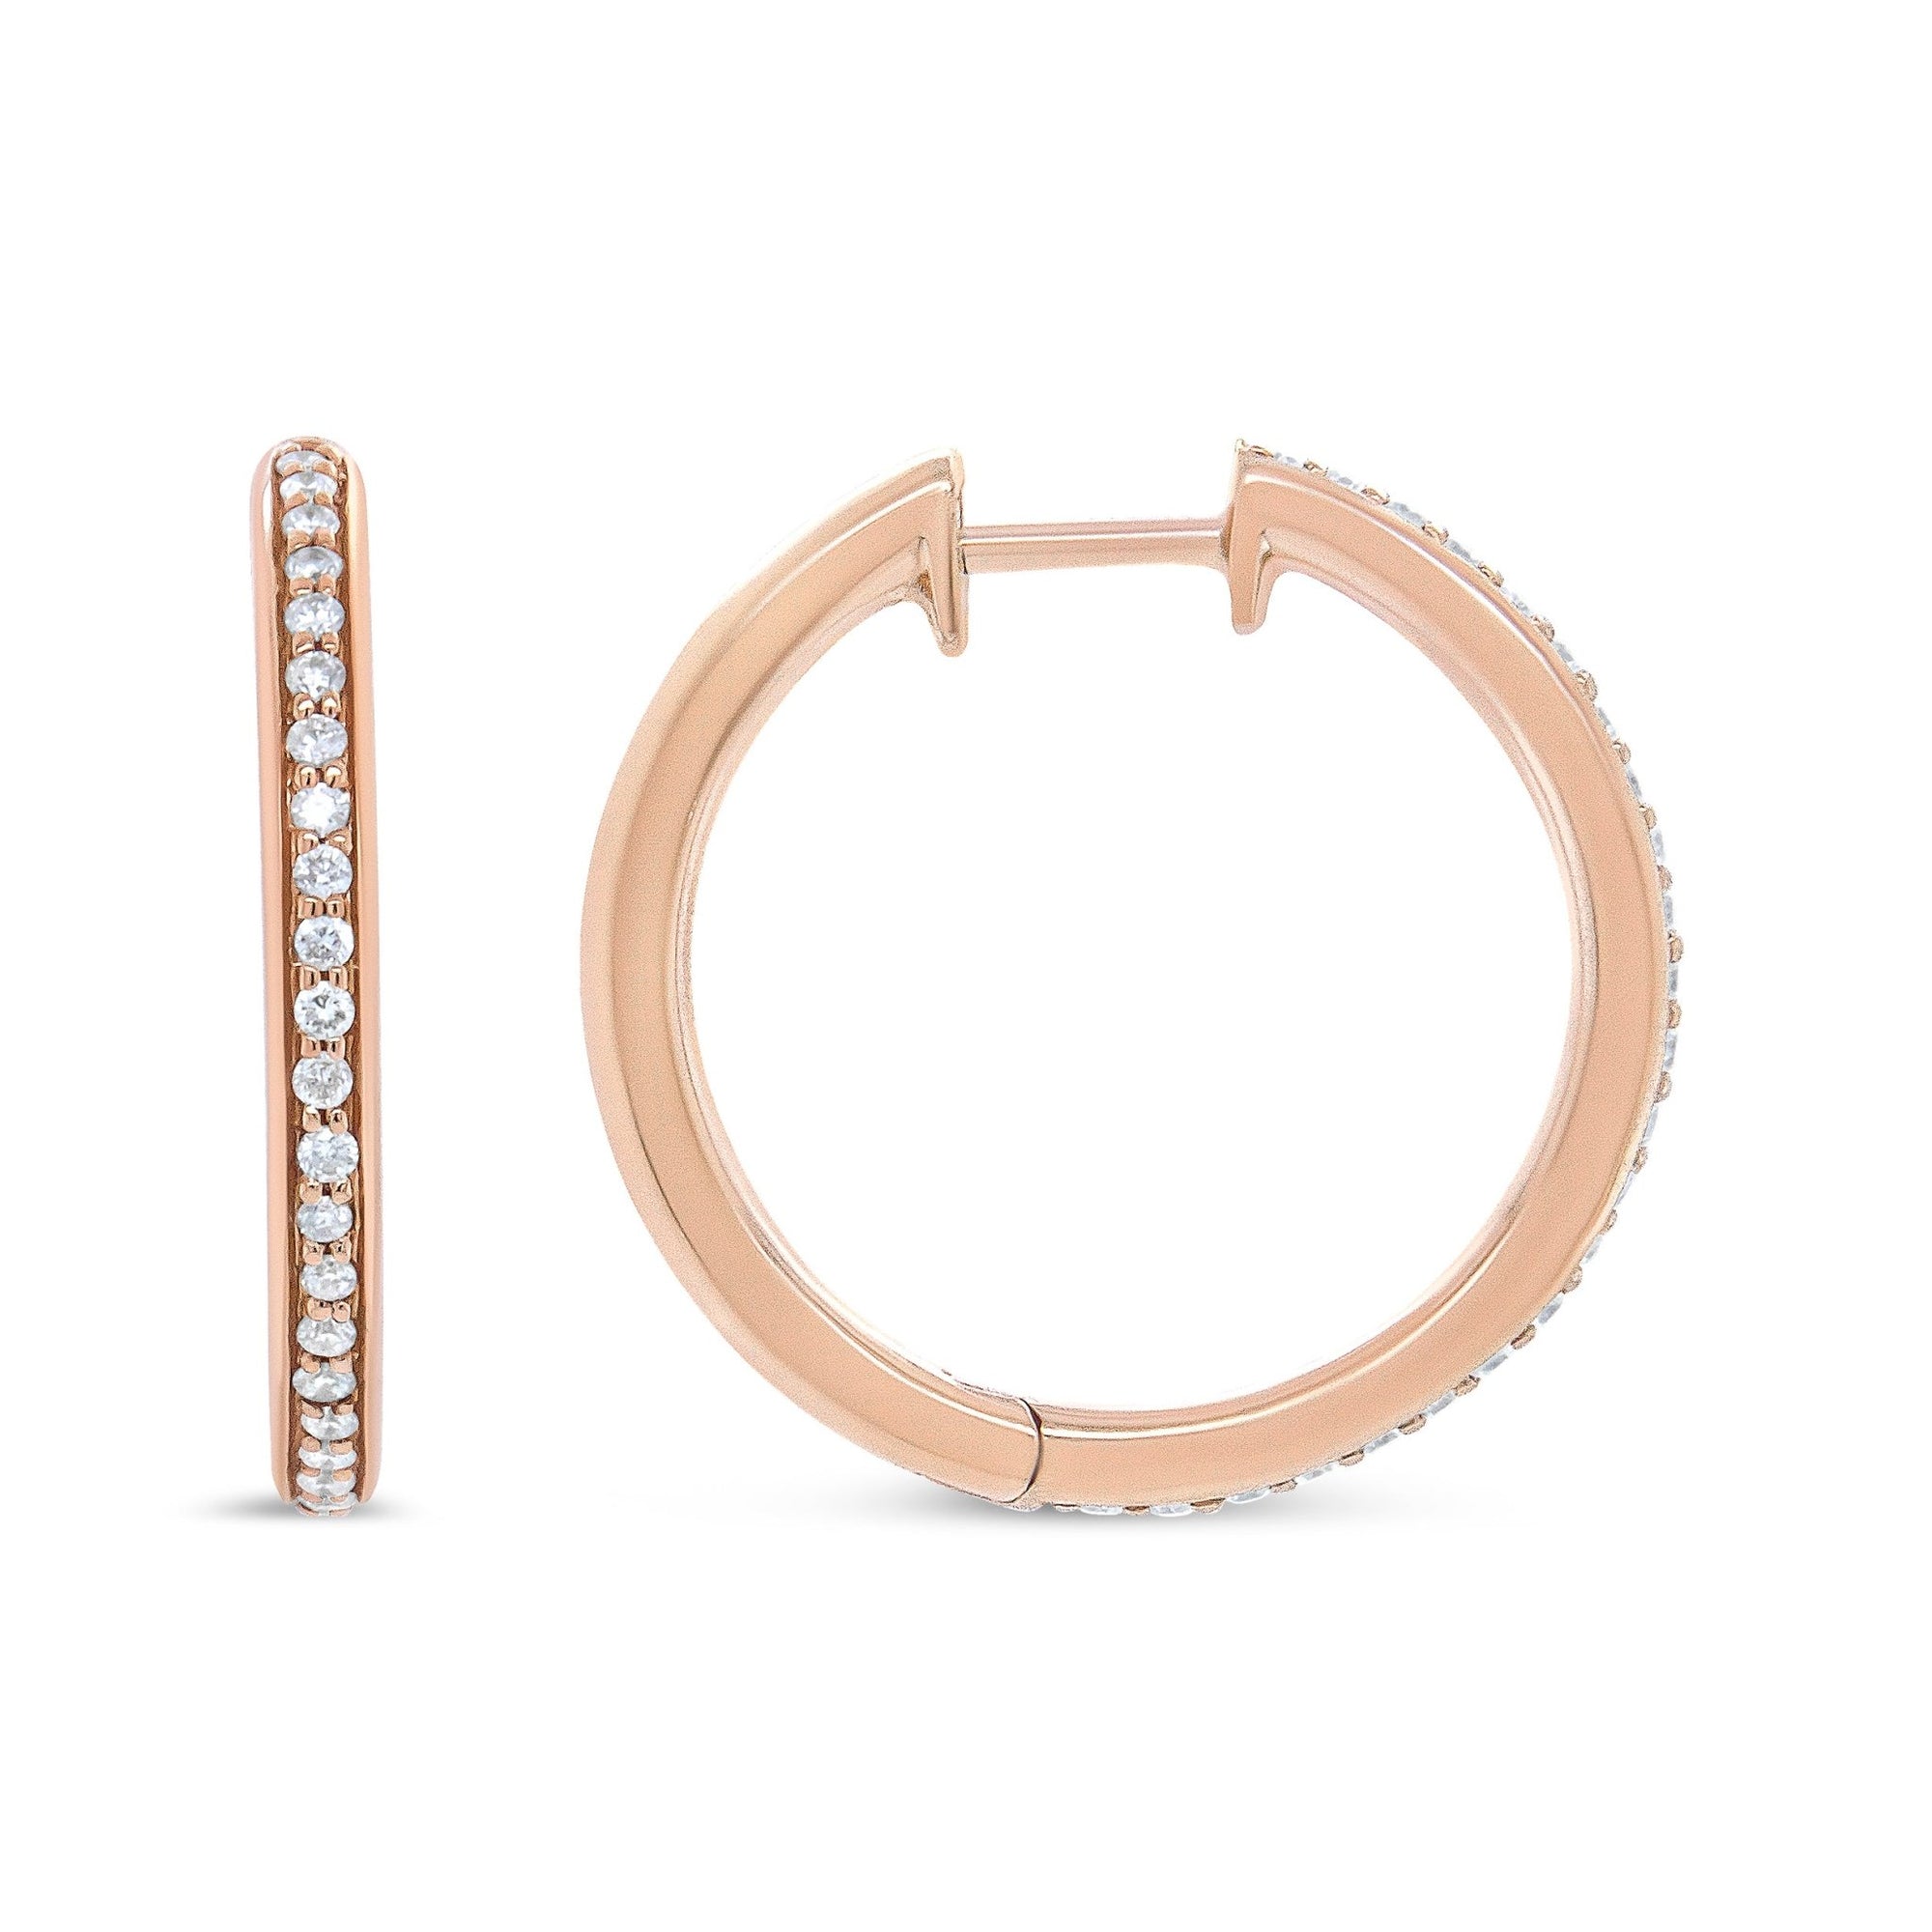 18K Rose Gold 1/5 Cttw Round Diamond Hoop Earrings (F-G Color, VS1-VS2 Clarity) - LinkagejewelrydesignLinkagejewelrydesign